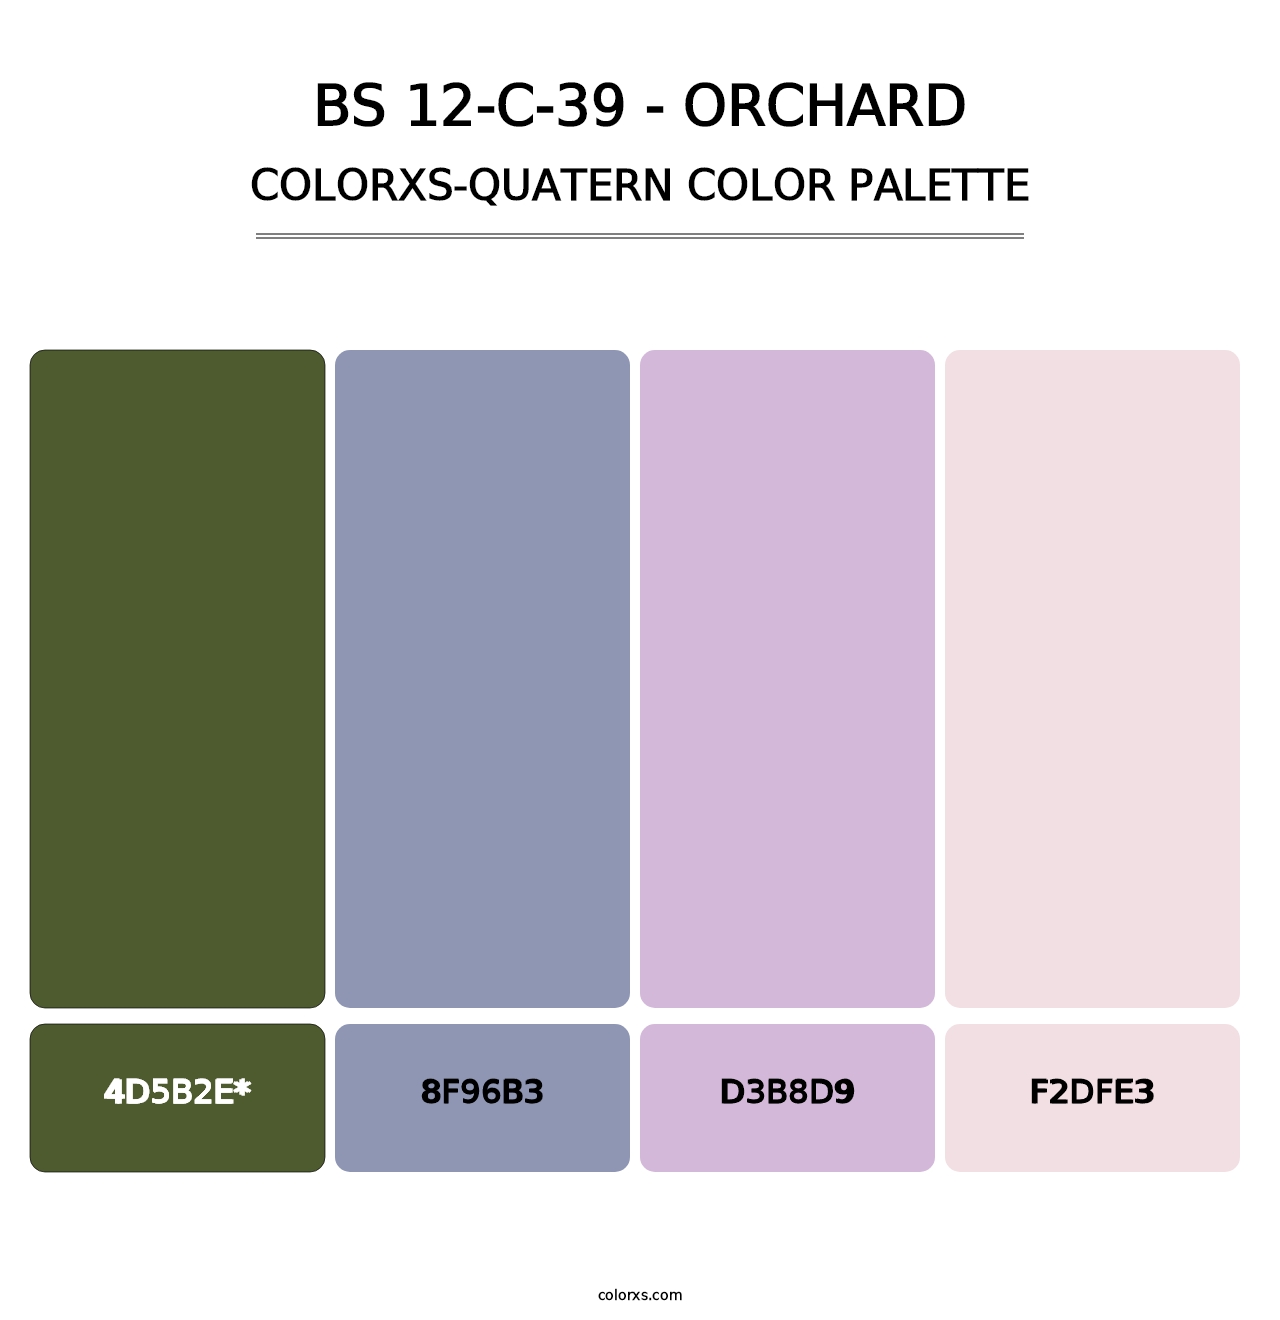 BS 12-C-39 - Orchard - Colorxs Quatern Palette